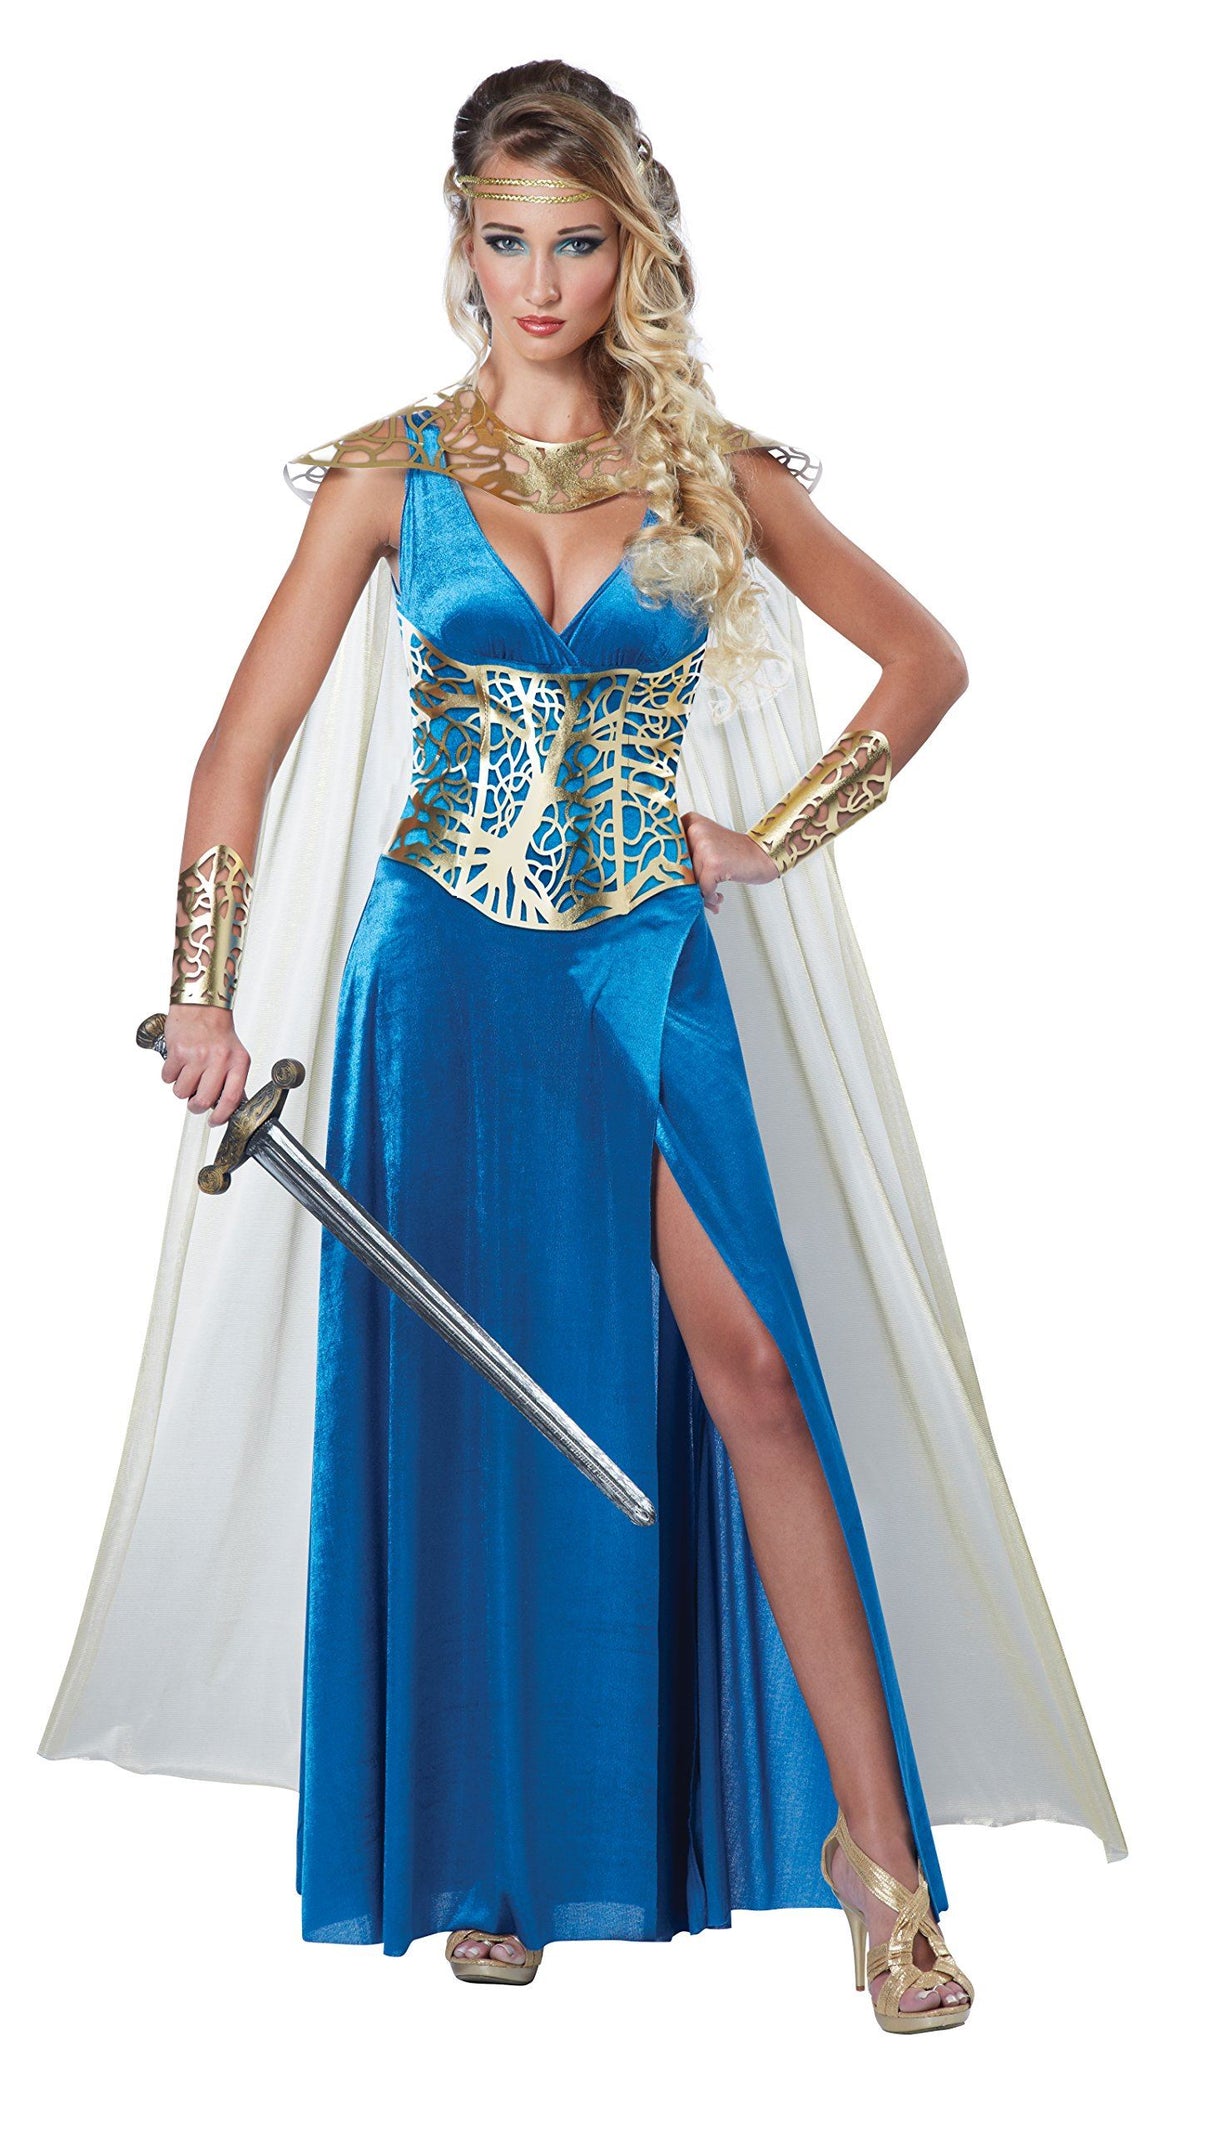 Women's Warrior Queen Medieval Renaissance Costume - XL